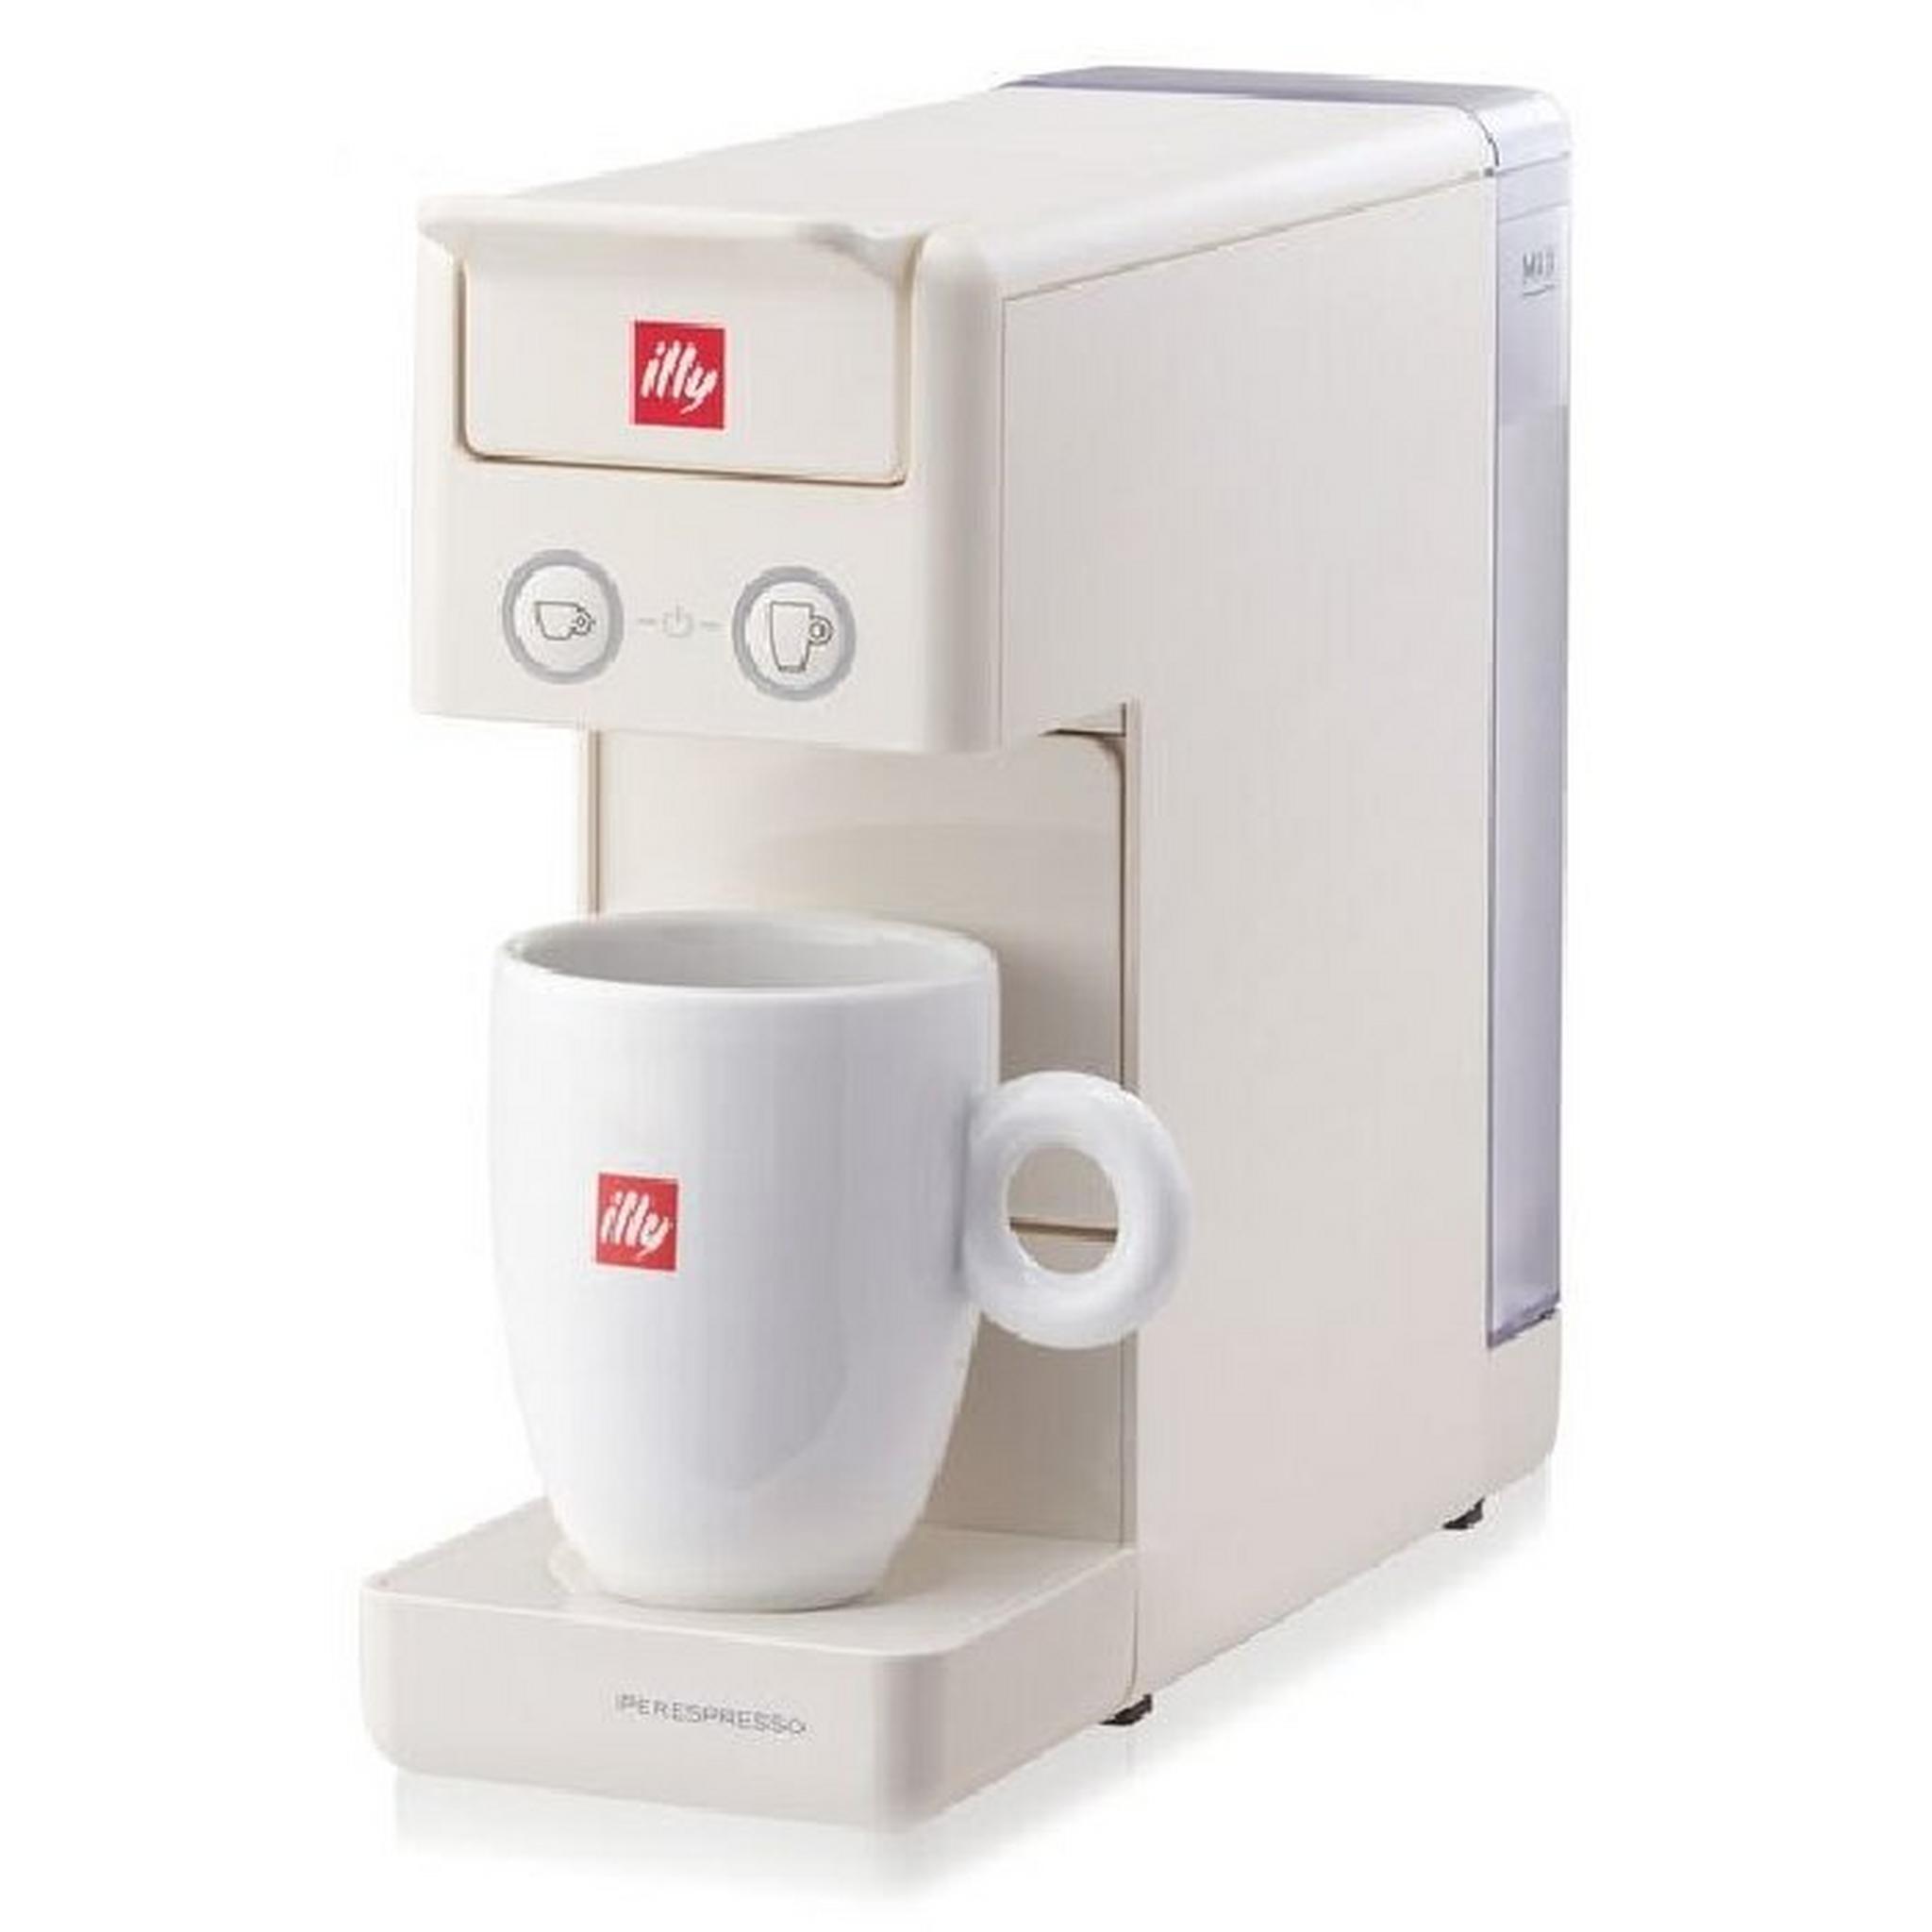 illy Coffee Machine iperEspresso (60375) - White